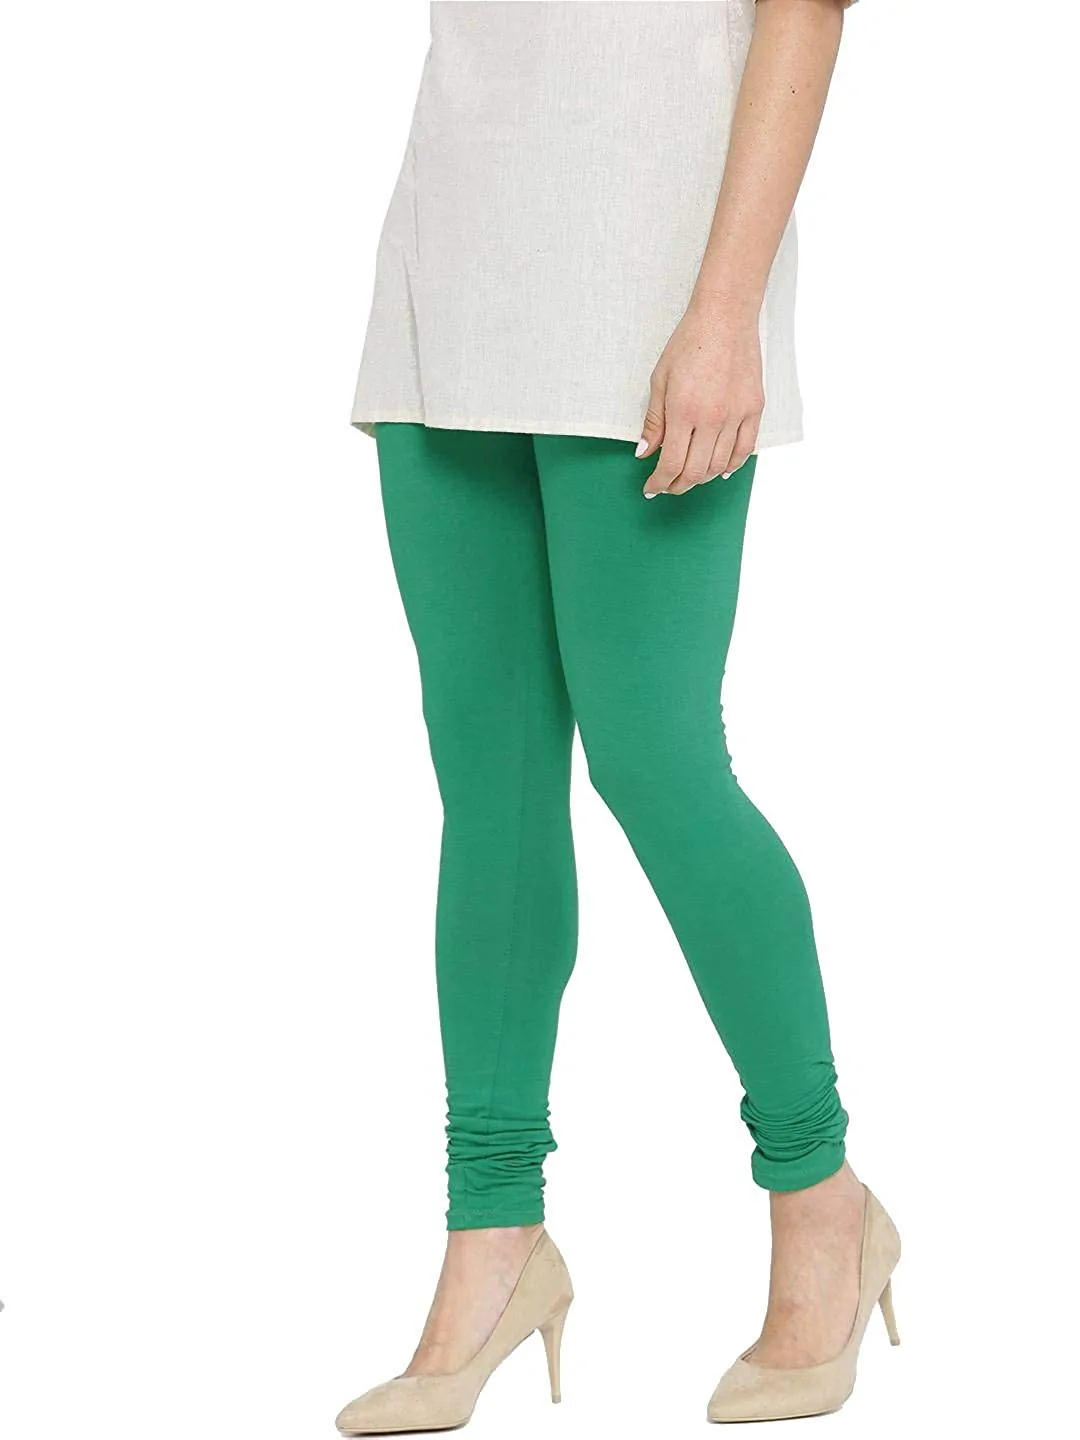 High Waist light green Cotton legra leggings for women', Casual Wear, Slim  Fit at Rs 210 in New Delhi